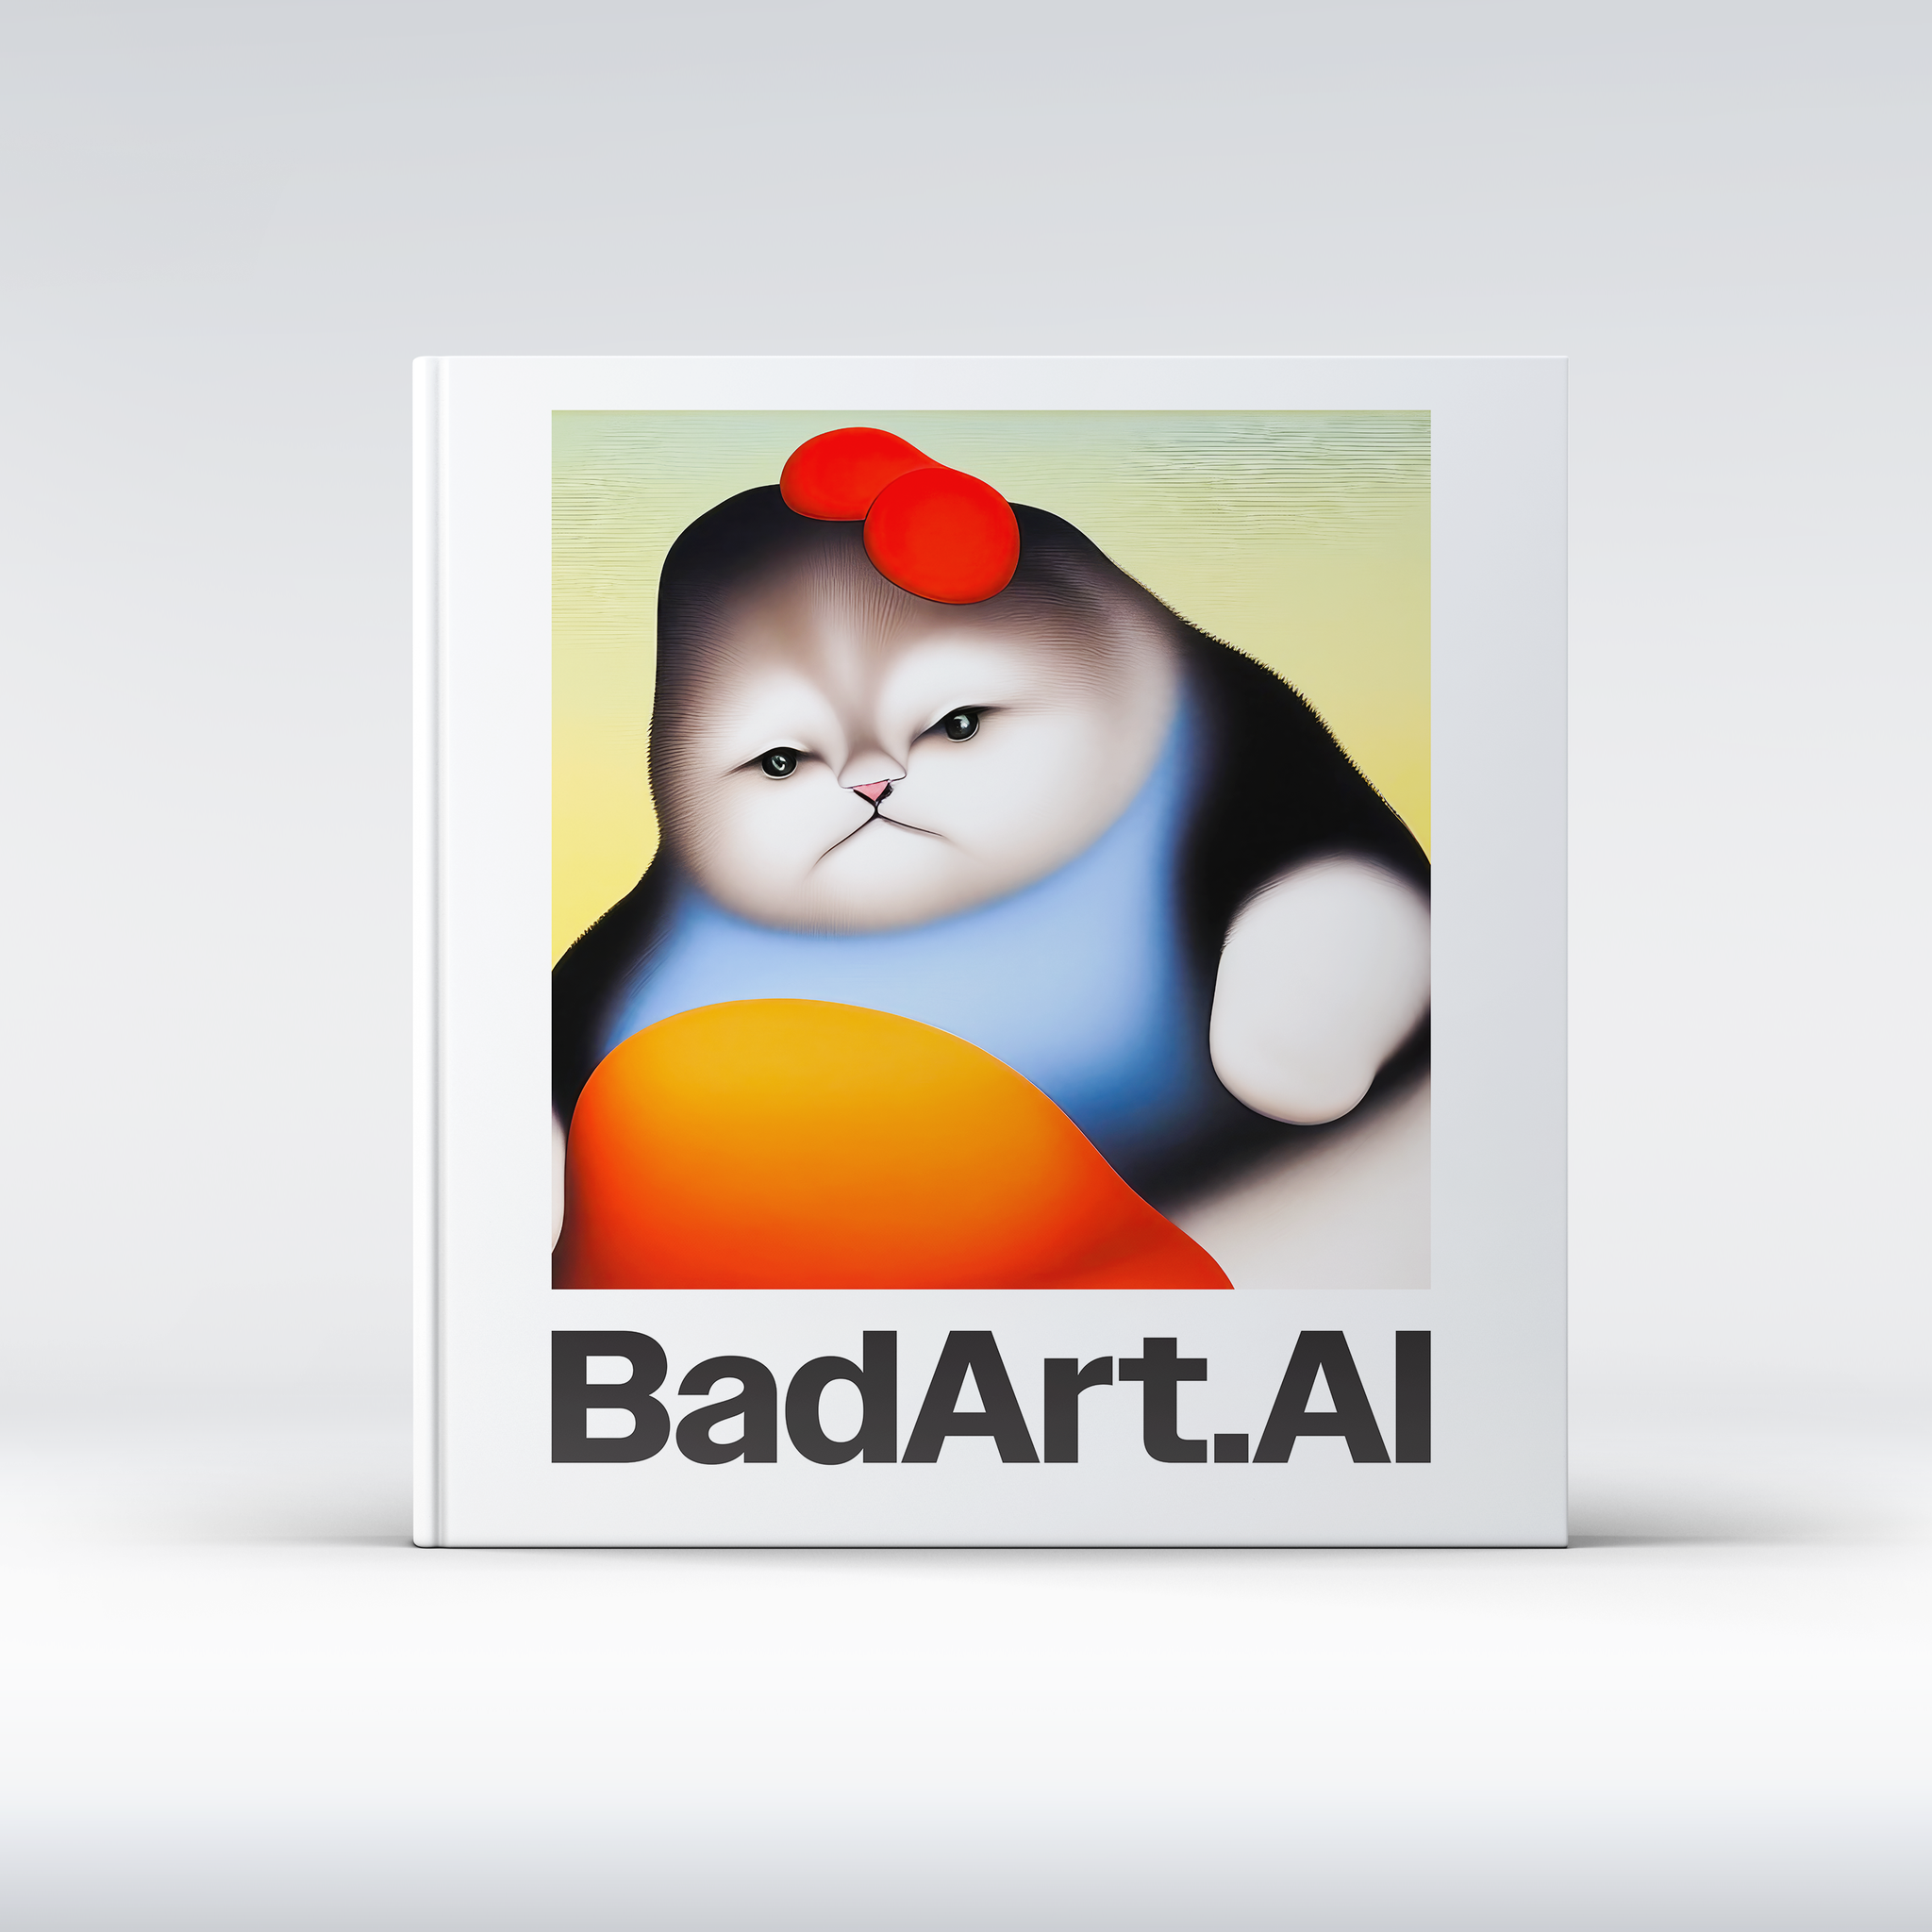 BadArt.AI: Volume One